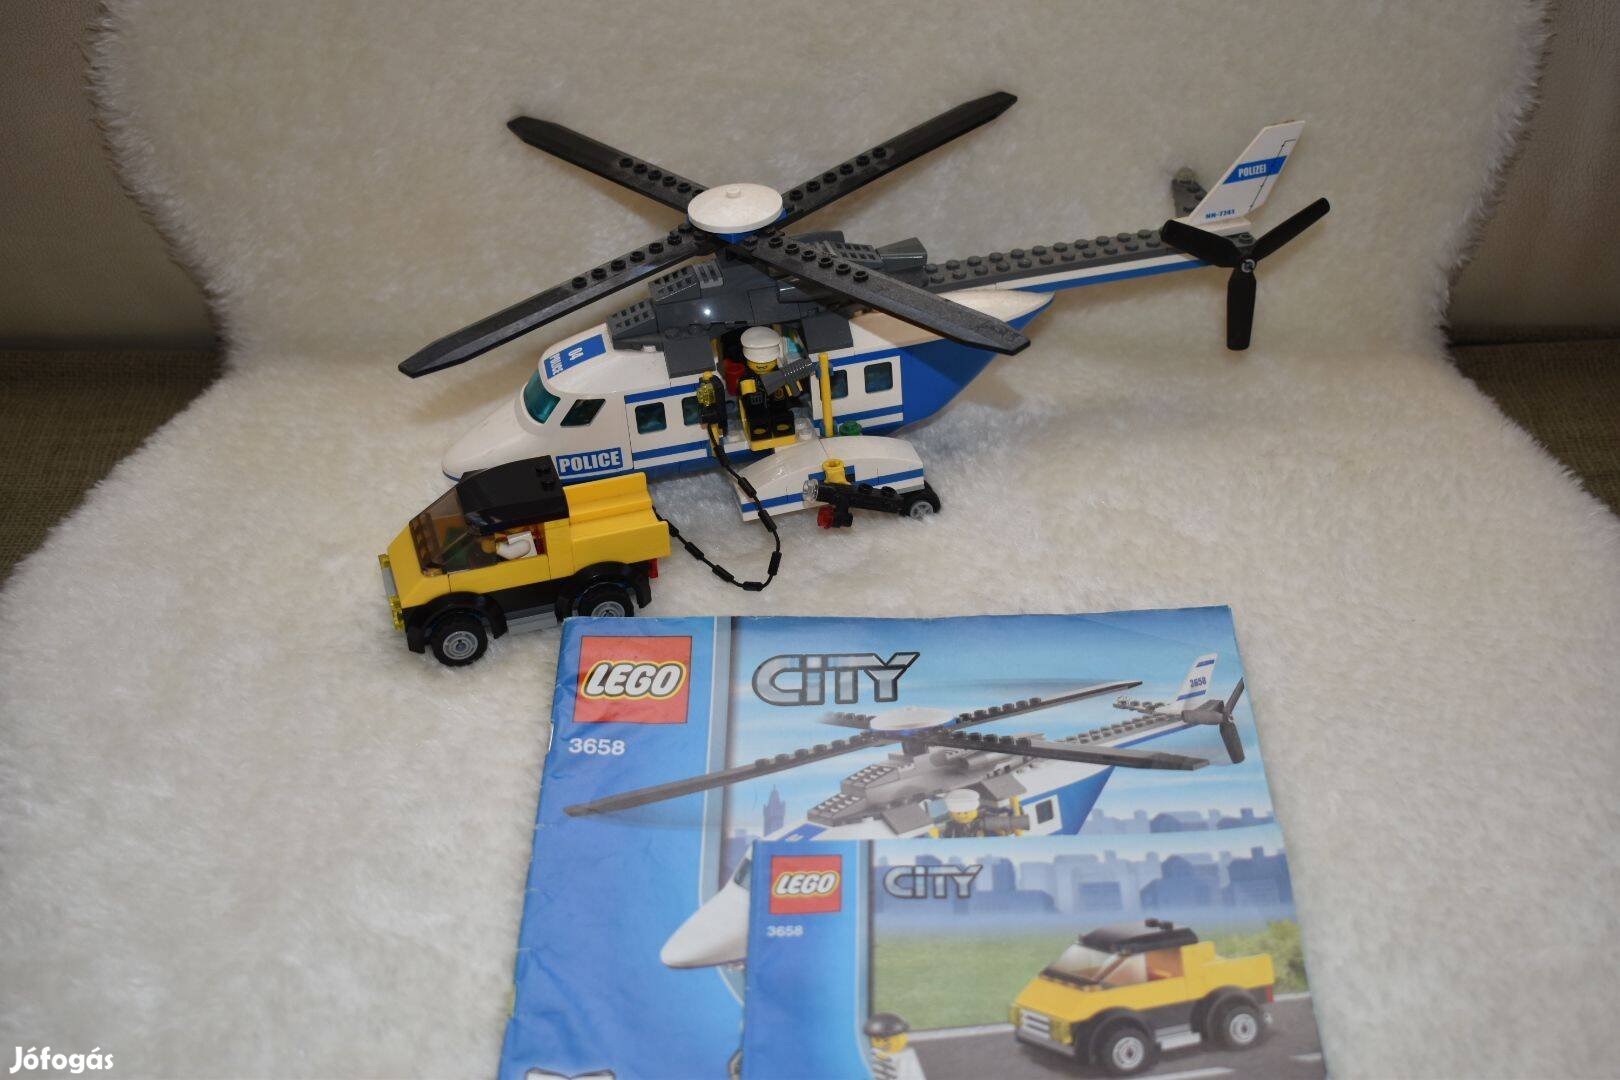 Lego City 3658 (Rendőr helikopter)